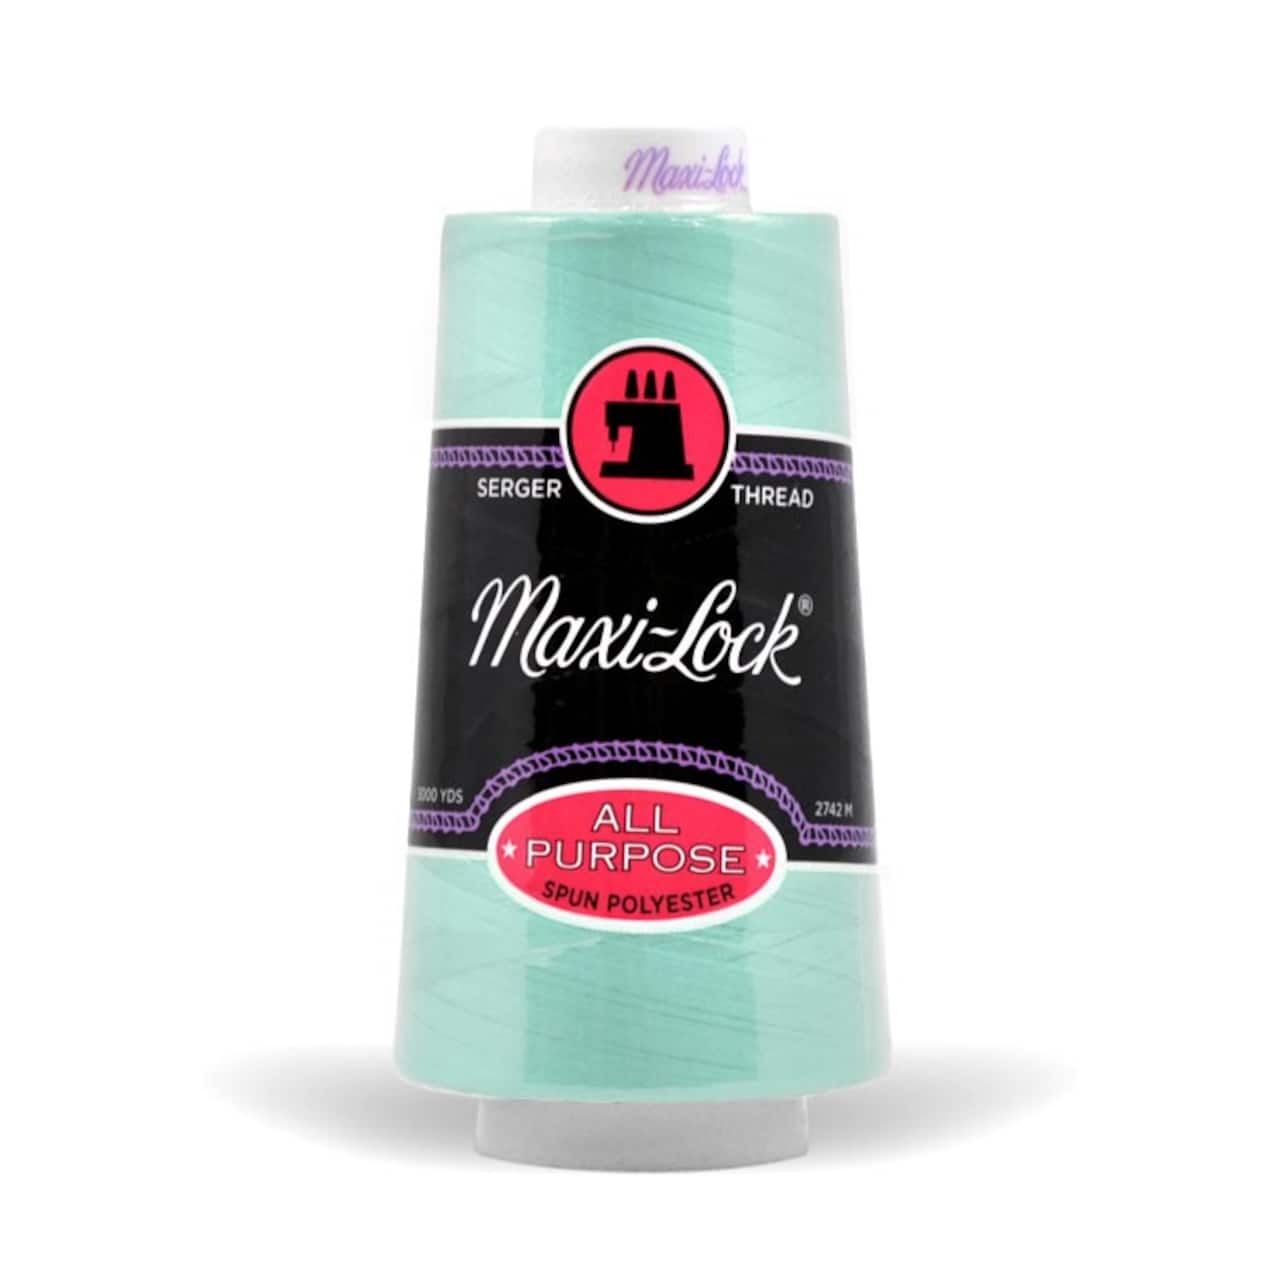 Maxi-Lock Serger Thread - Turquoise